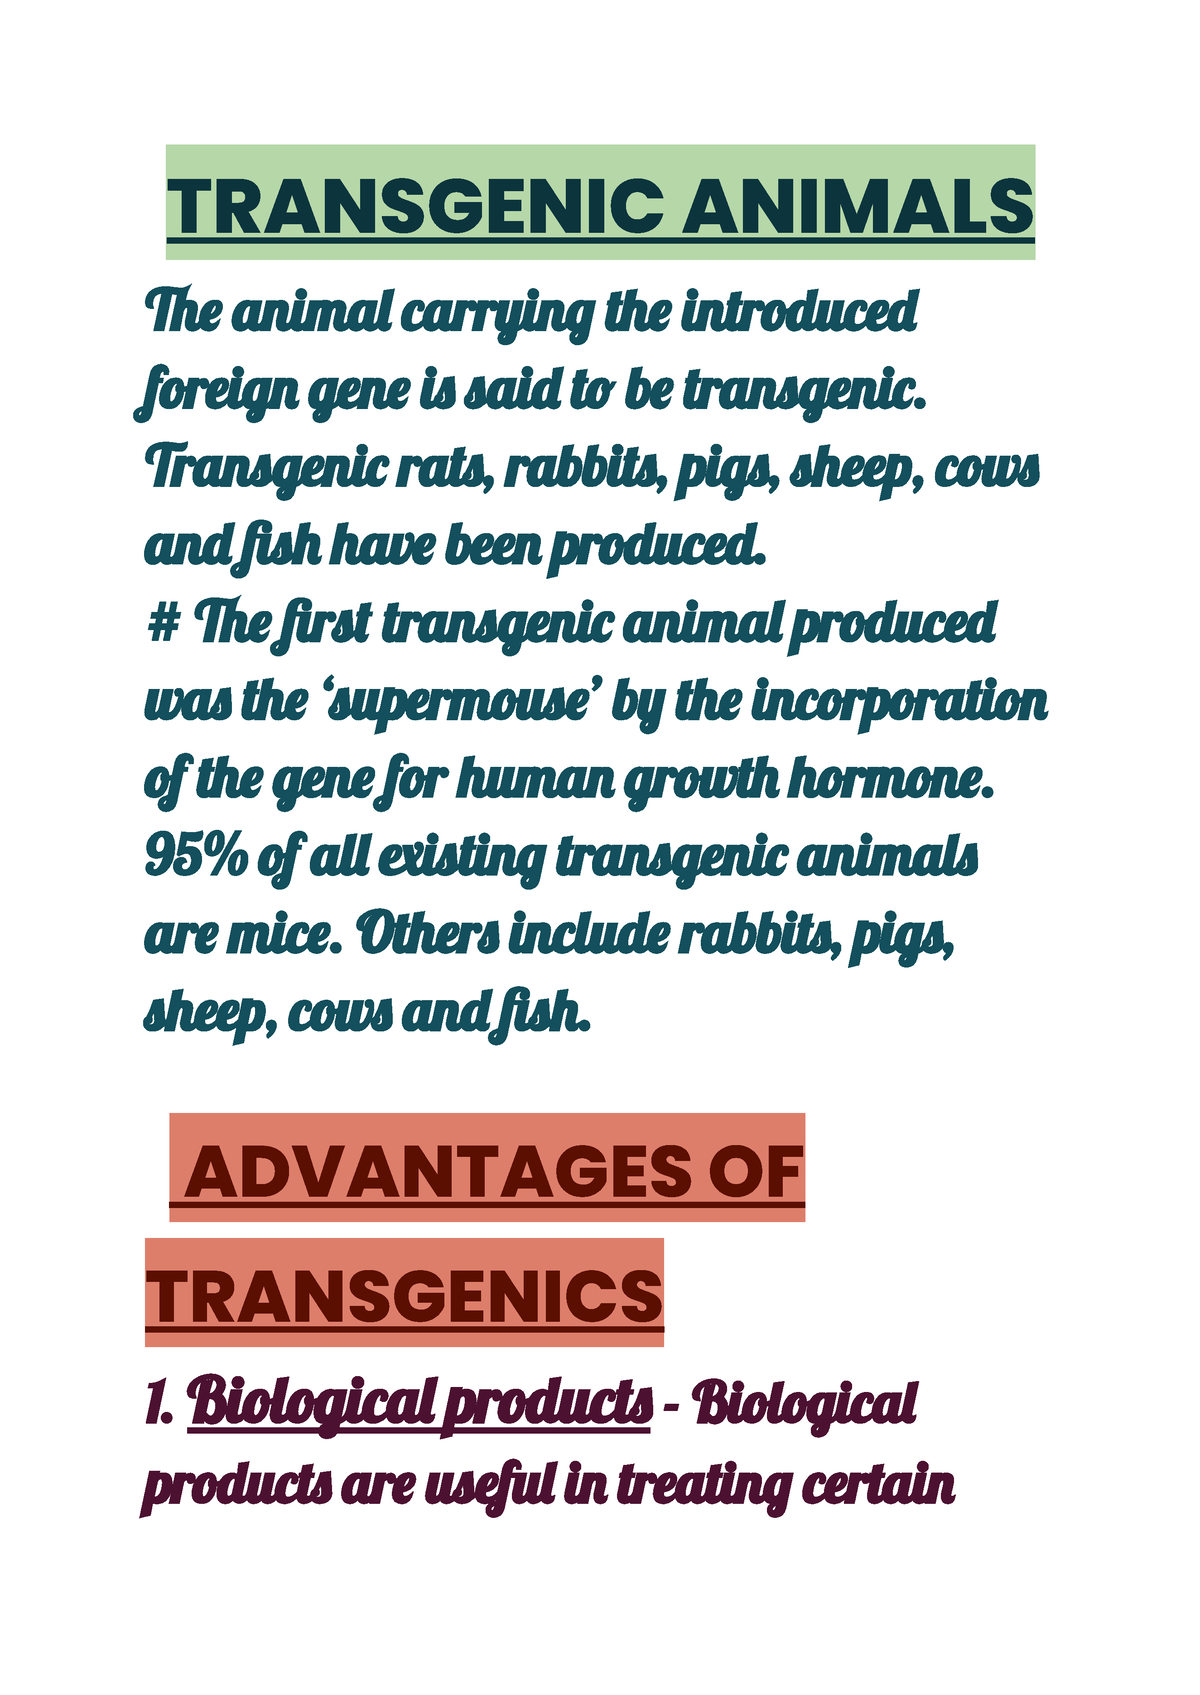 Transgenic Animals - TRANSGENIC ANIMALS anima carryin th introduce foreig  gen i sai t b transgeni. - Studocu